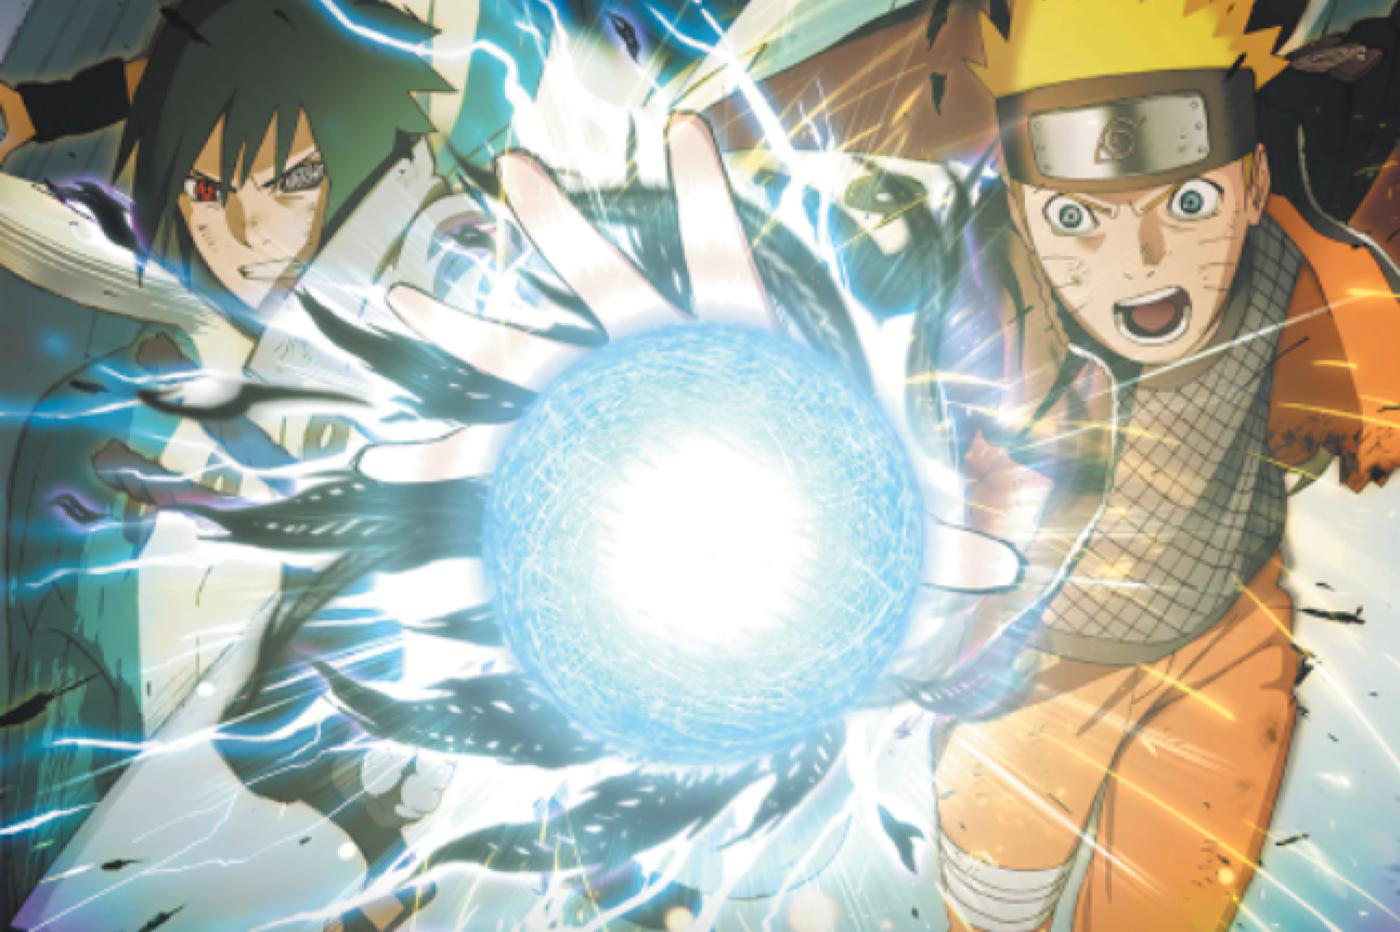 Image promotionnelle de Naruto Storm 4 avec Sasuke et Naruto